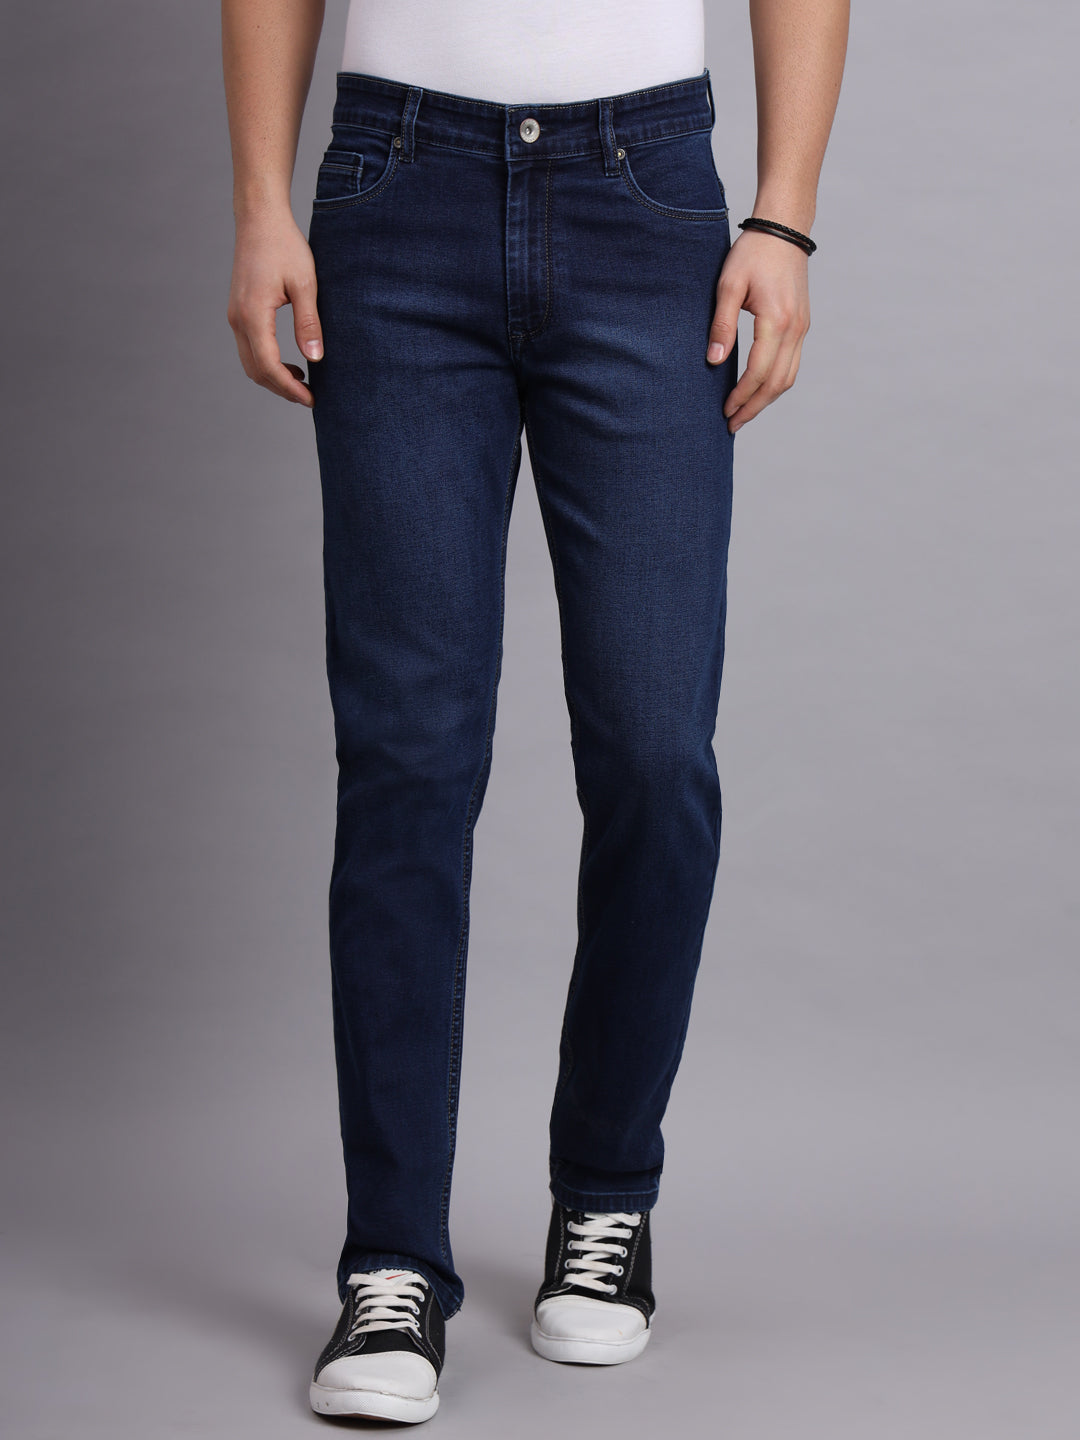 Amswan Premium Dark Navy Denim Jeans for Men